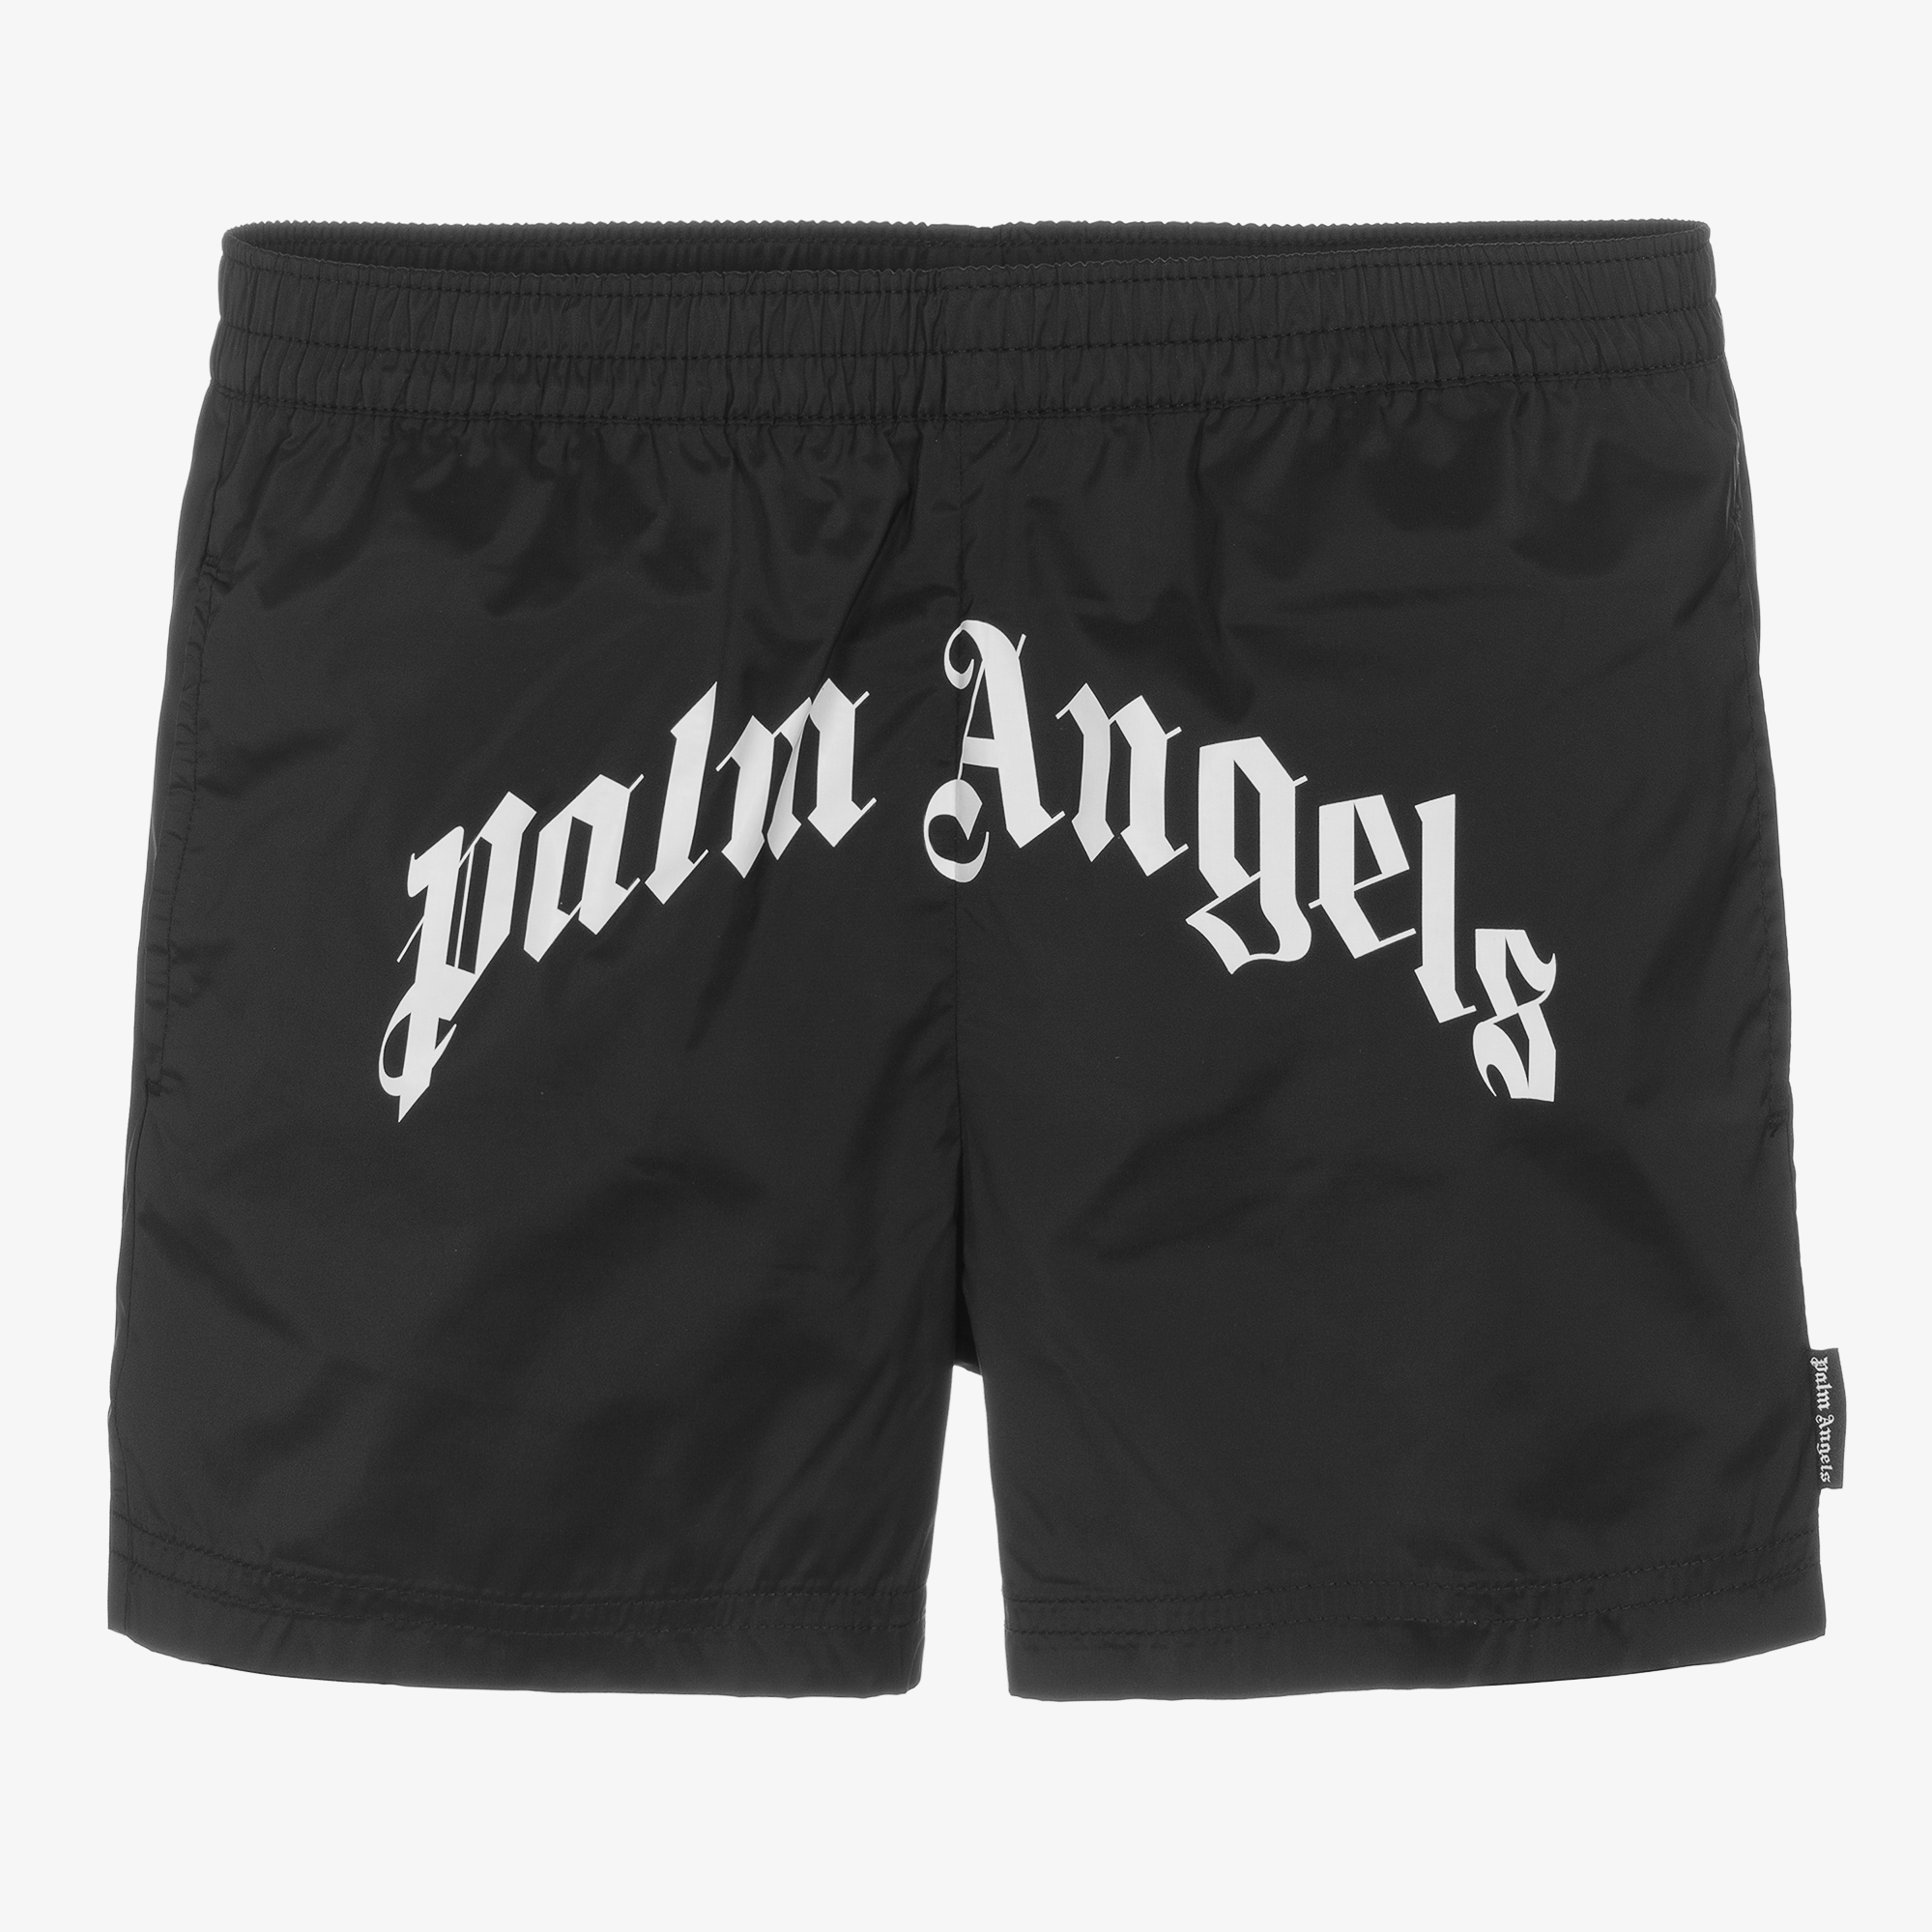 PALM ANGELS, Black Men's Swim Shorts